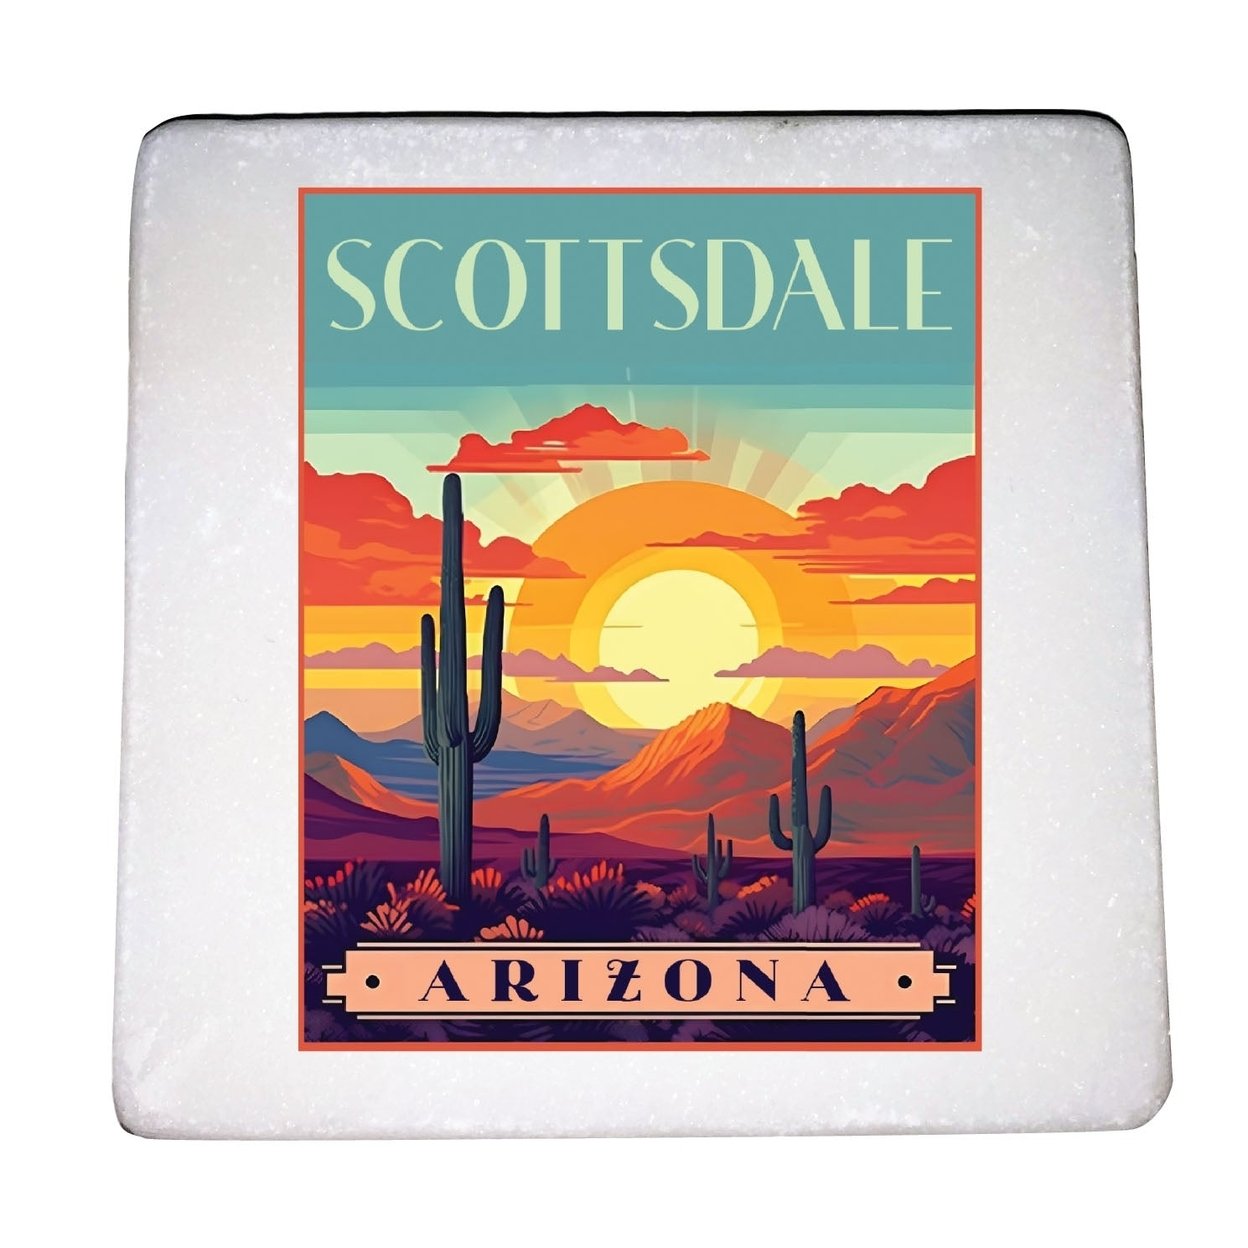 Scottsdale Arizona Design C Souvenir 4x4-Inch Coaster Marble 4 Pack